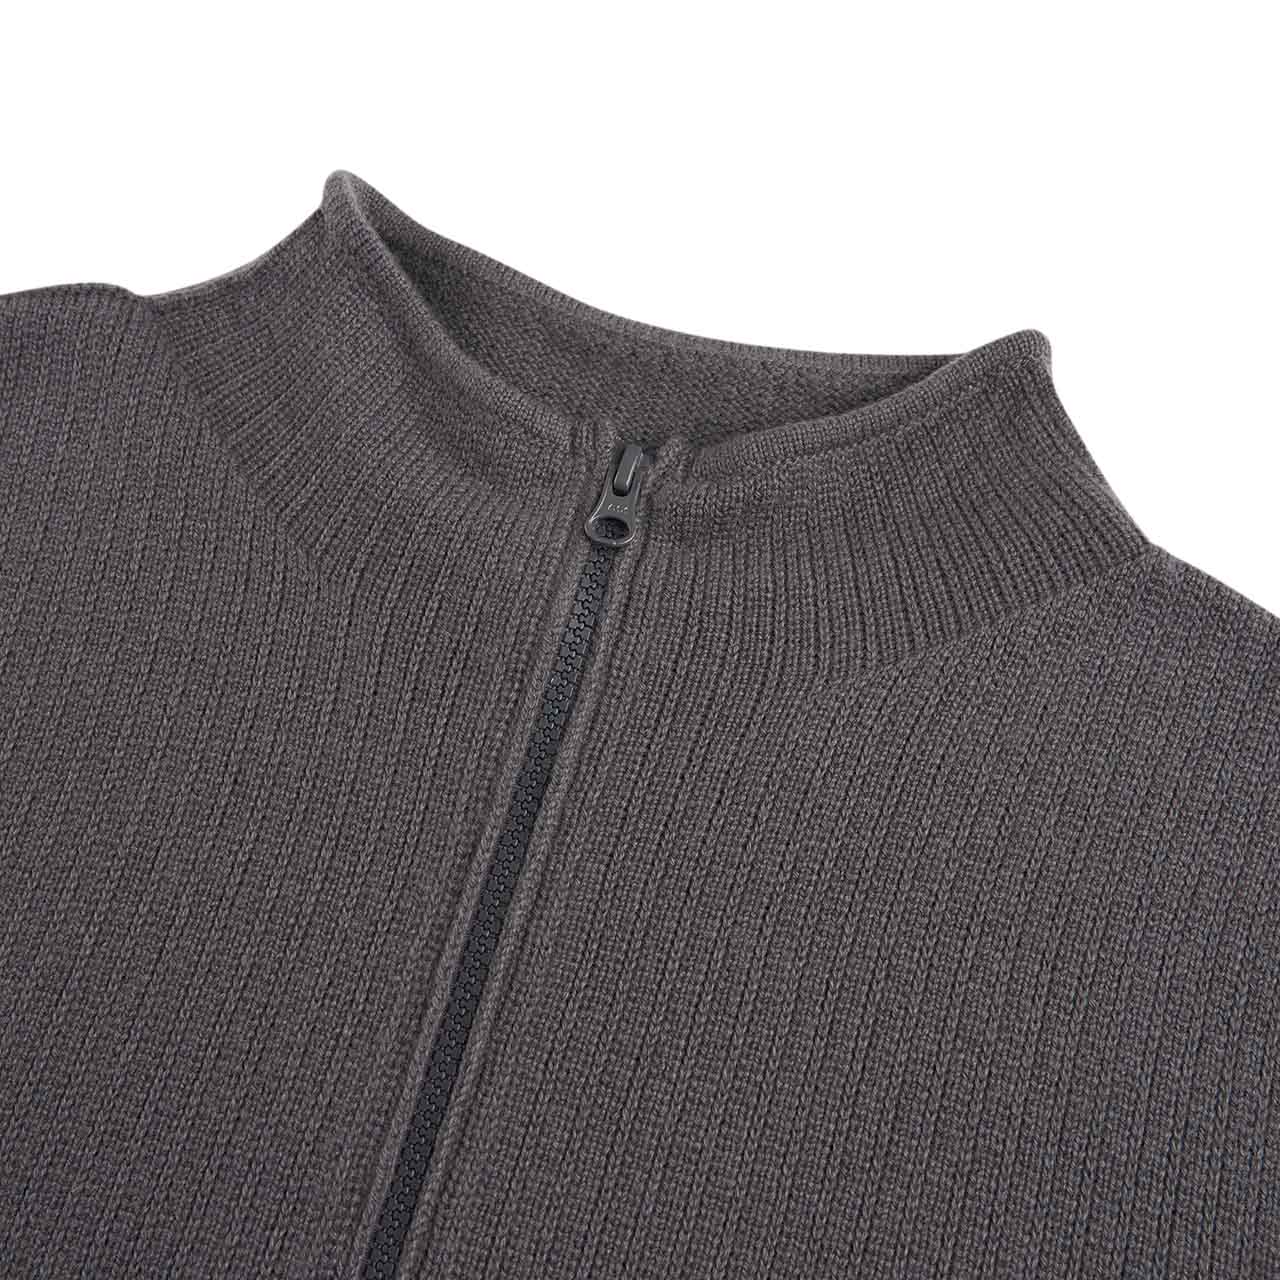 stone island ghost piece cashmere zip sweater (anthracite)